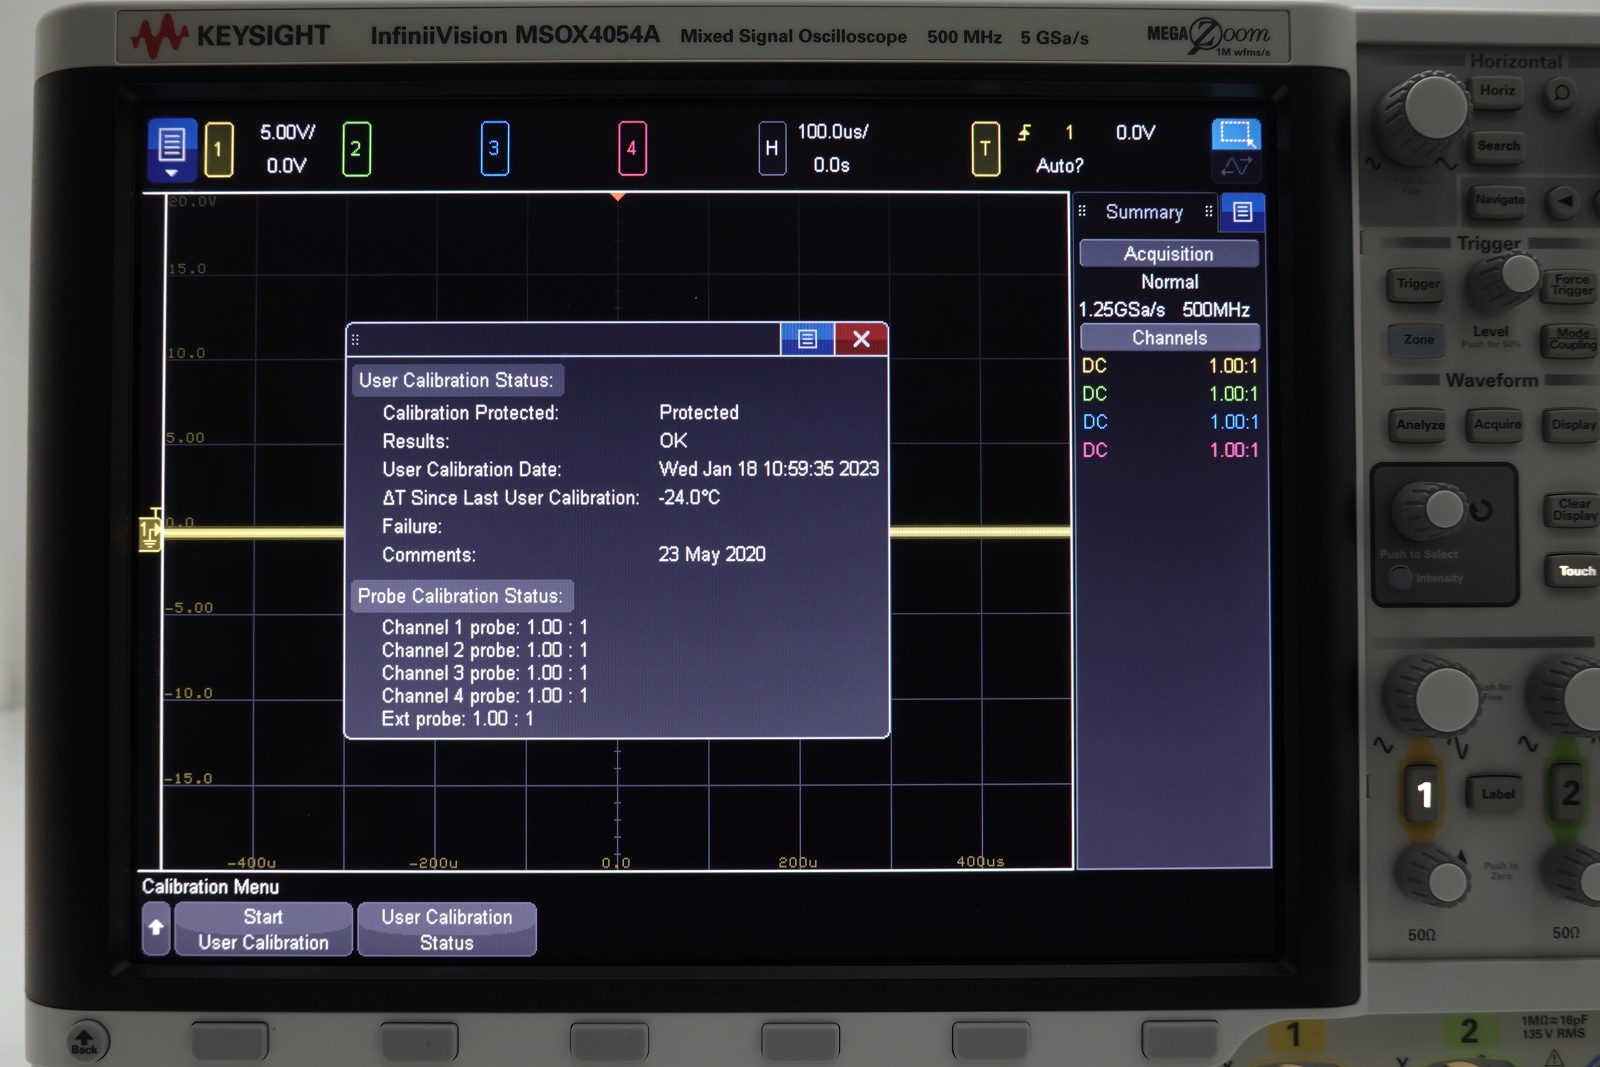 Keysight MSOX4054A Mixed Signal Oscilloscope / 500 MHz / 4 Analog Plus 16 Digital Channels